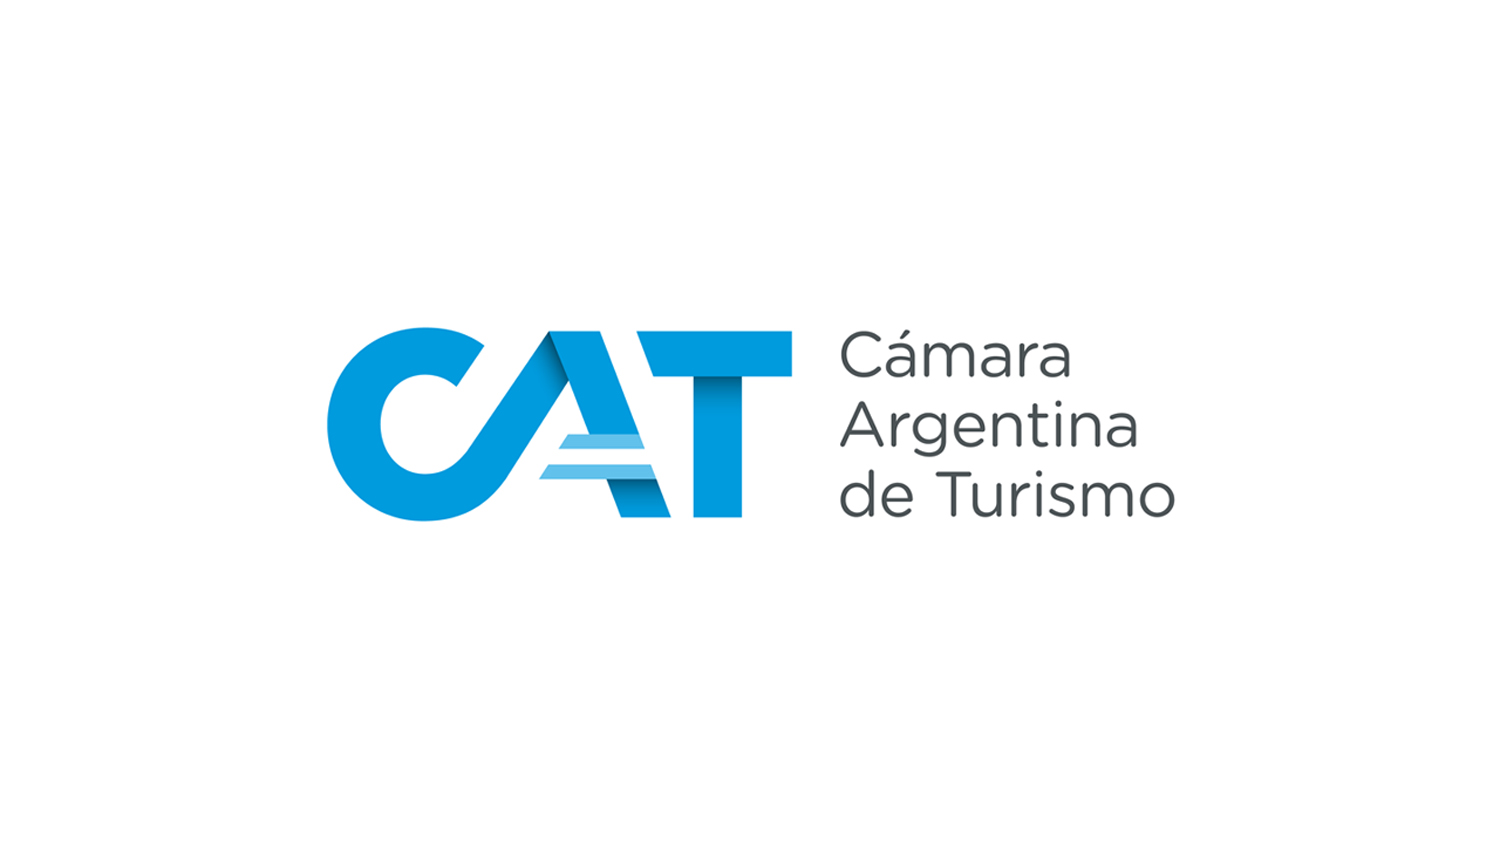 Camara Argentina de Turismo